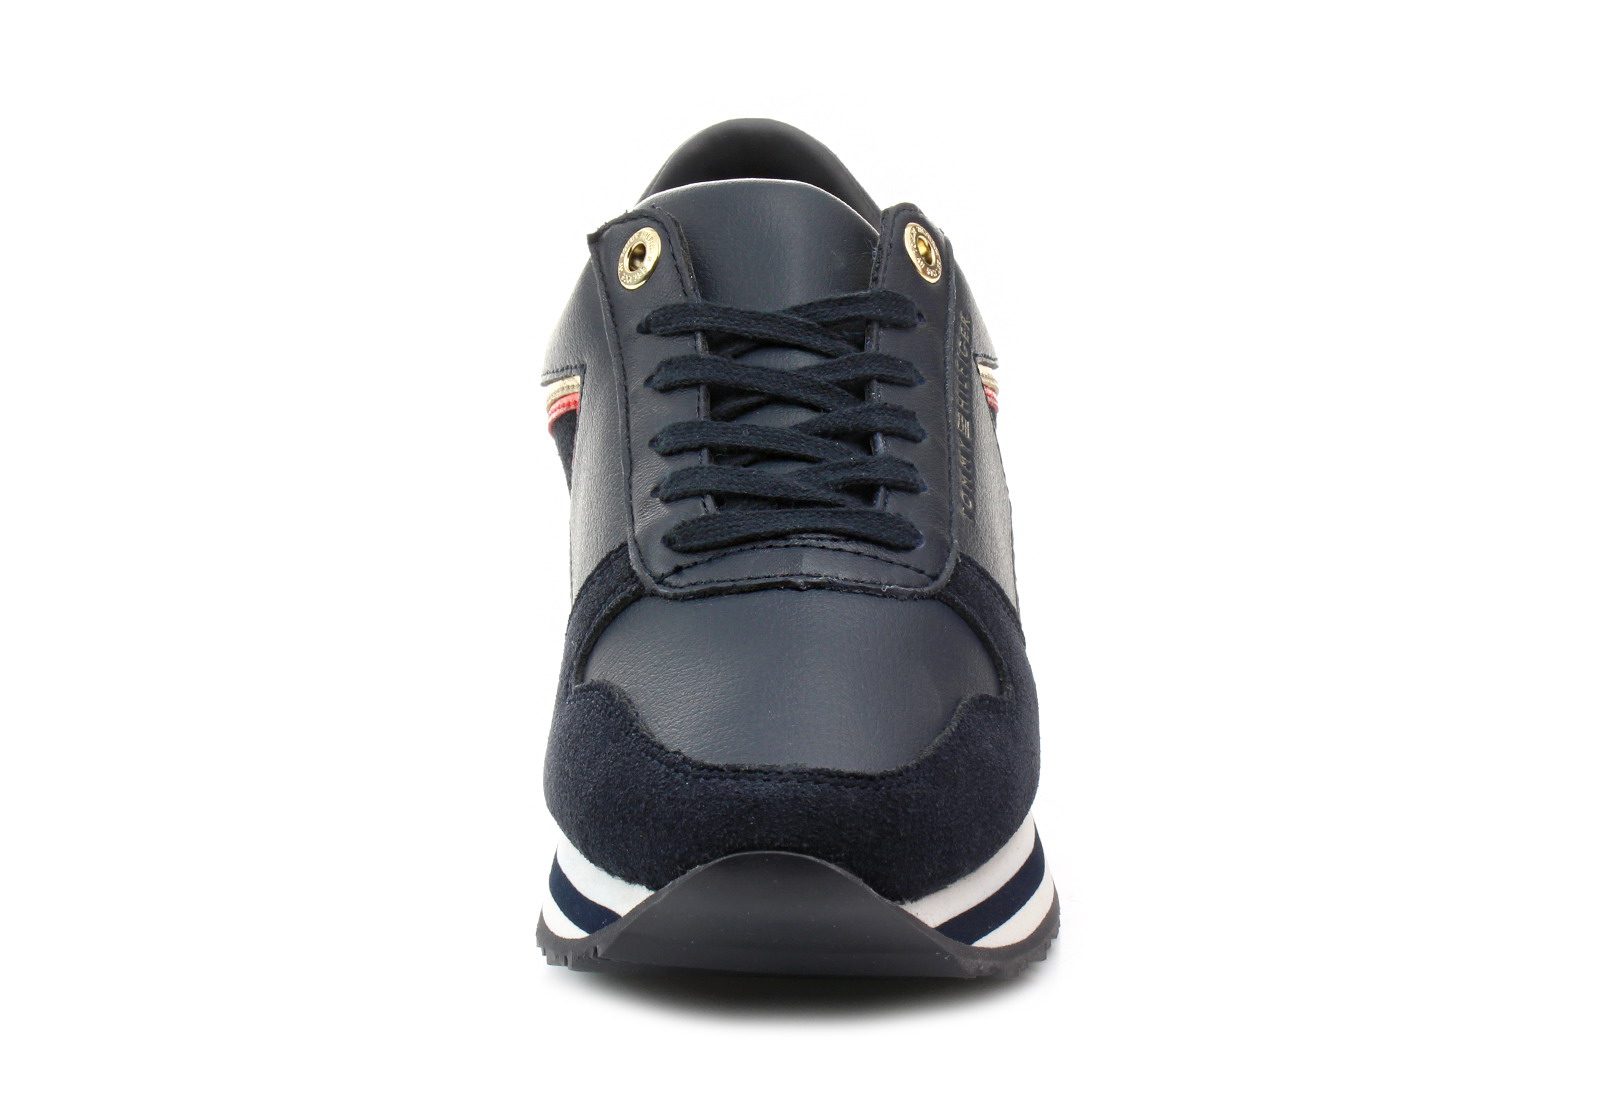 Pitfalls Clan zone Tommy Hilfiger Sneaker - Angel 3c - 18F-3234-020 - Office Shoes Magyarország